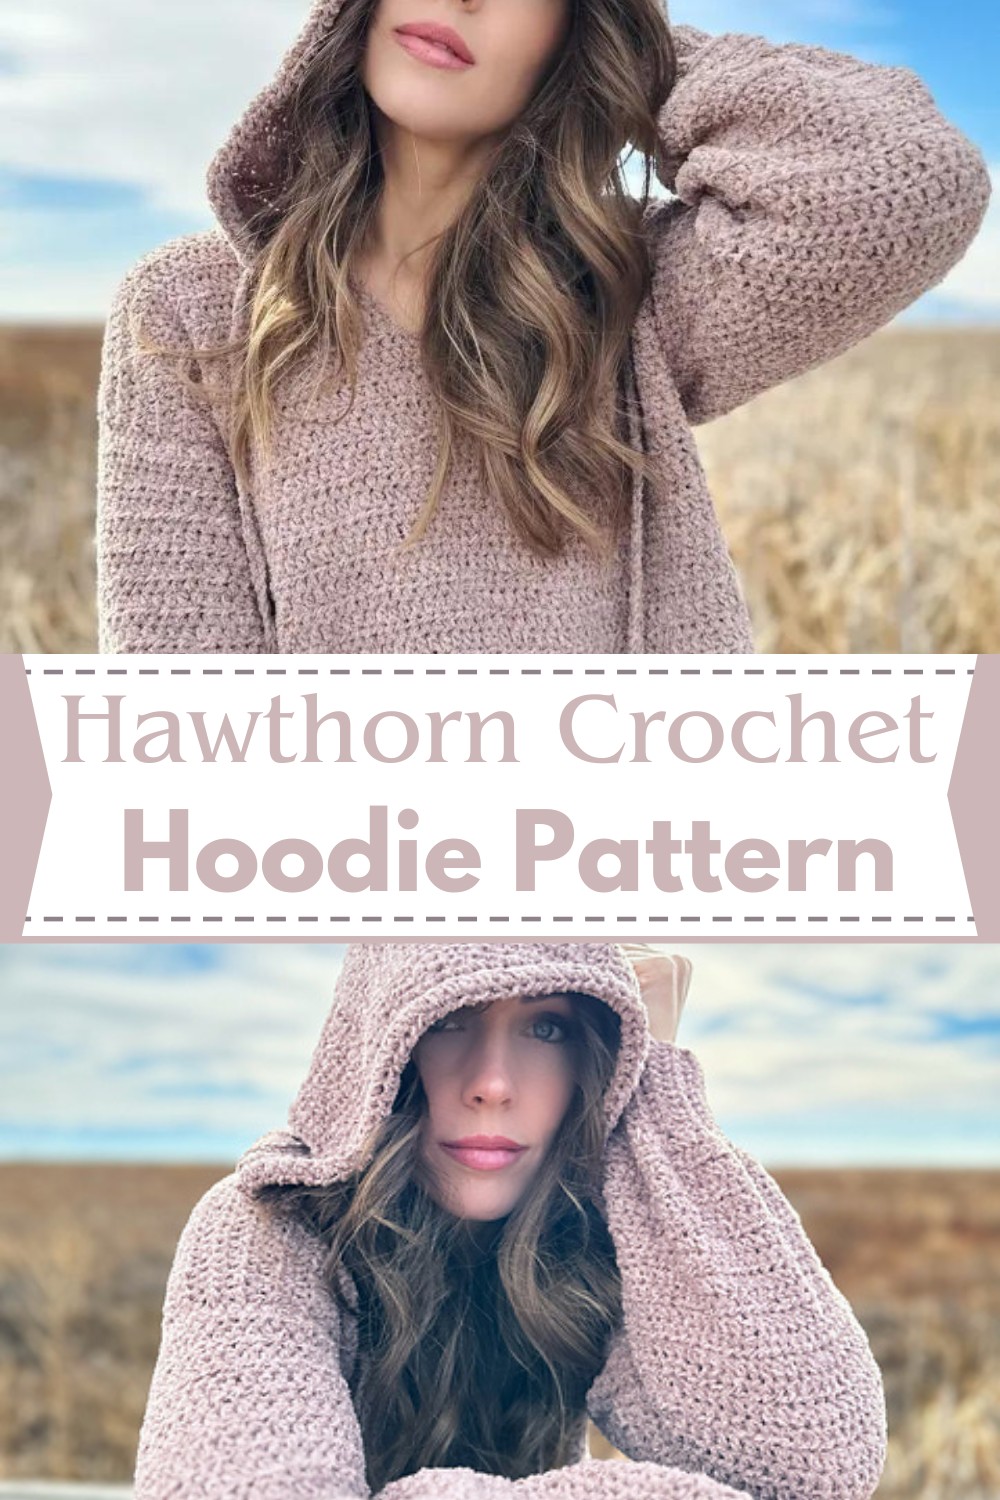 Hawthorn Crochet Hoodie Pattern